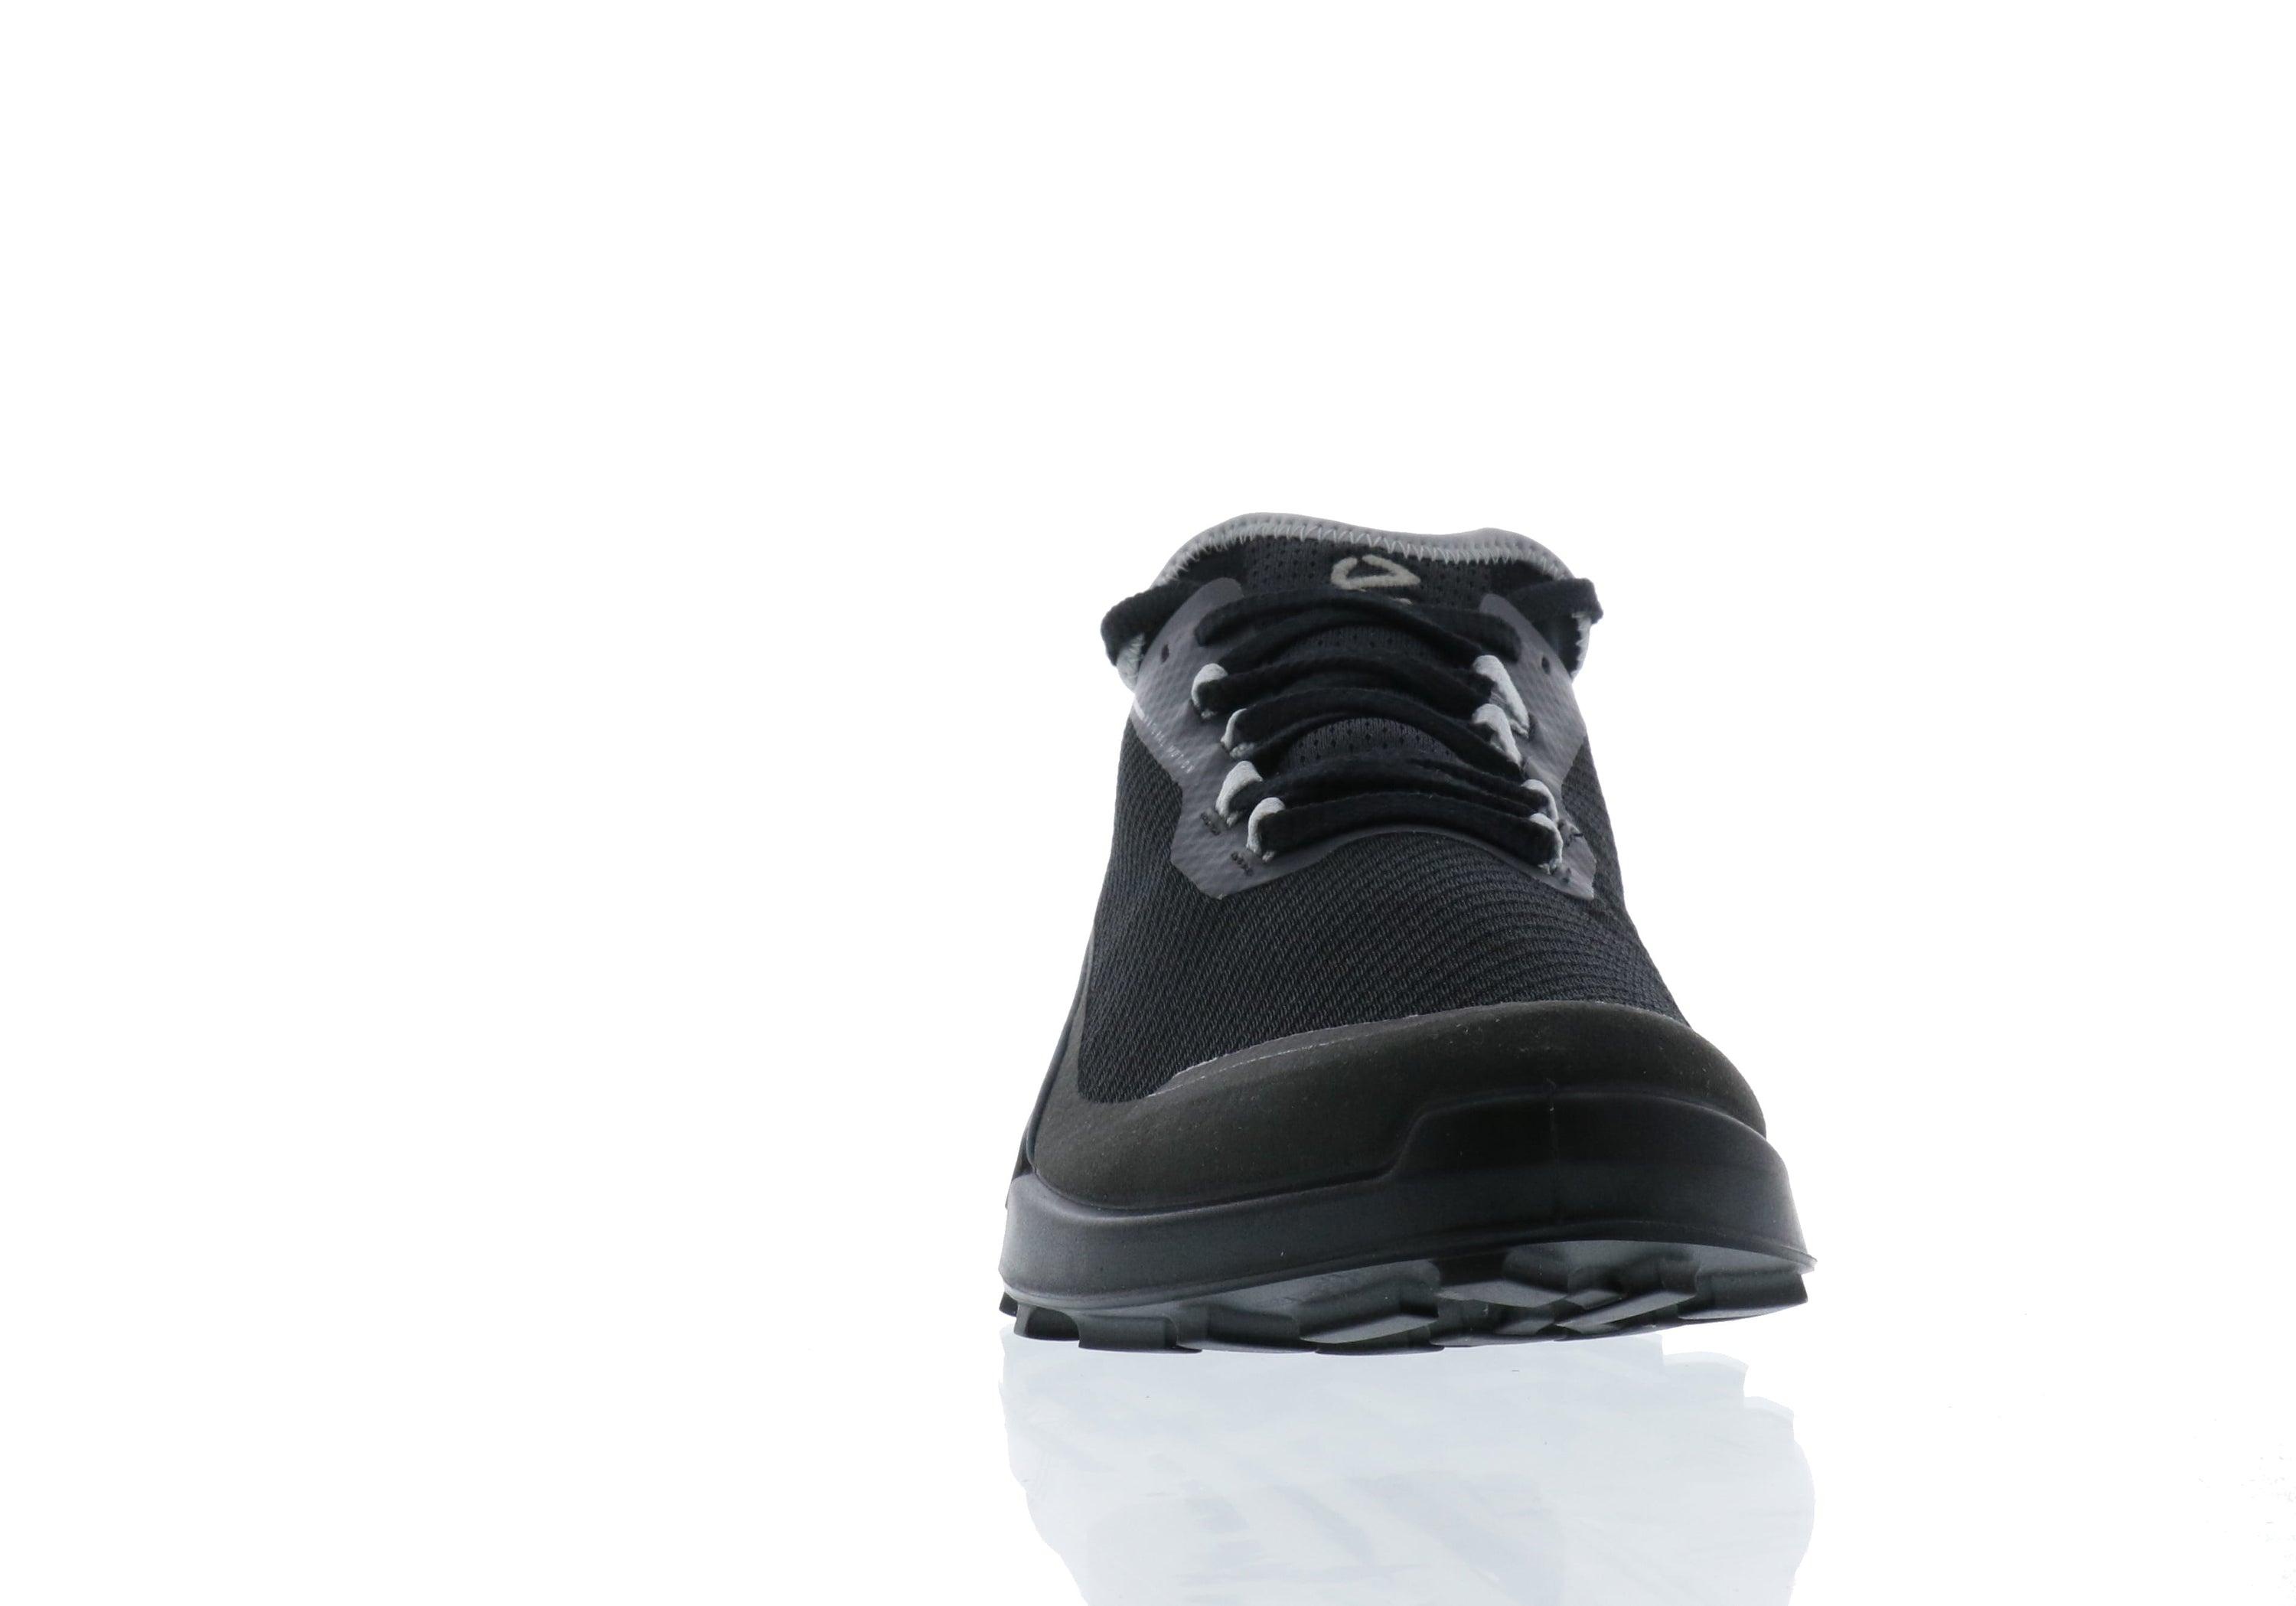 ECCO Biom 2.1X Country Sneaker (Men's) - Black